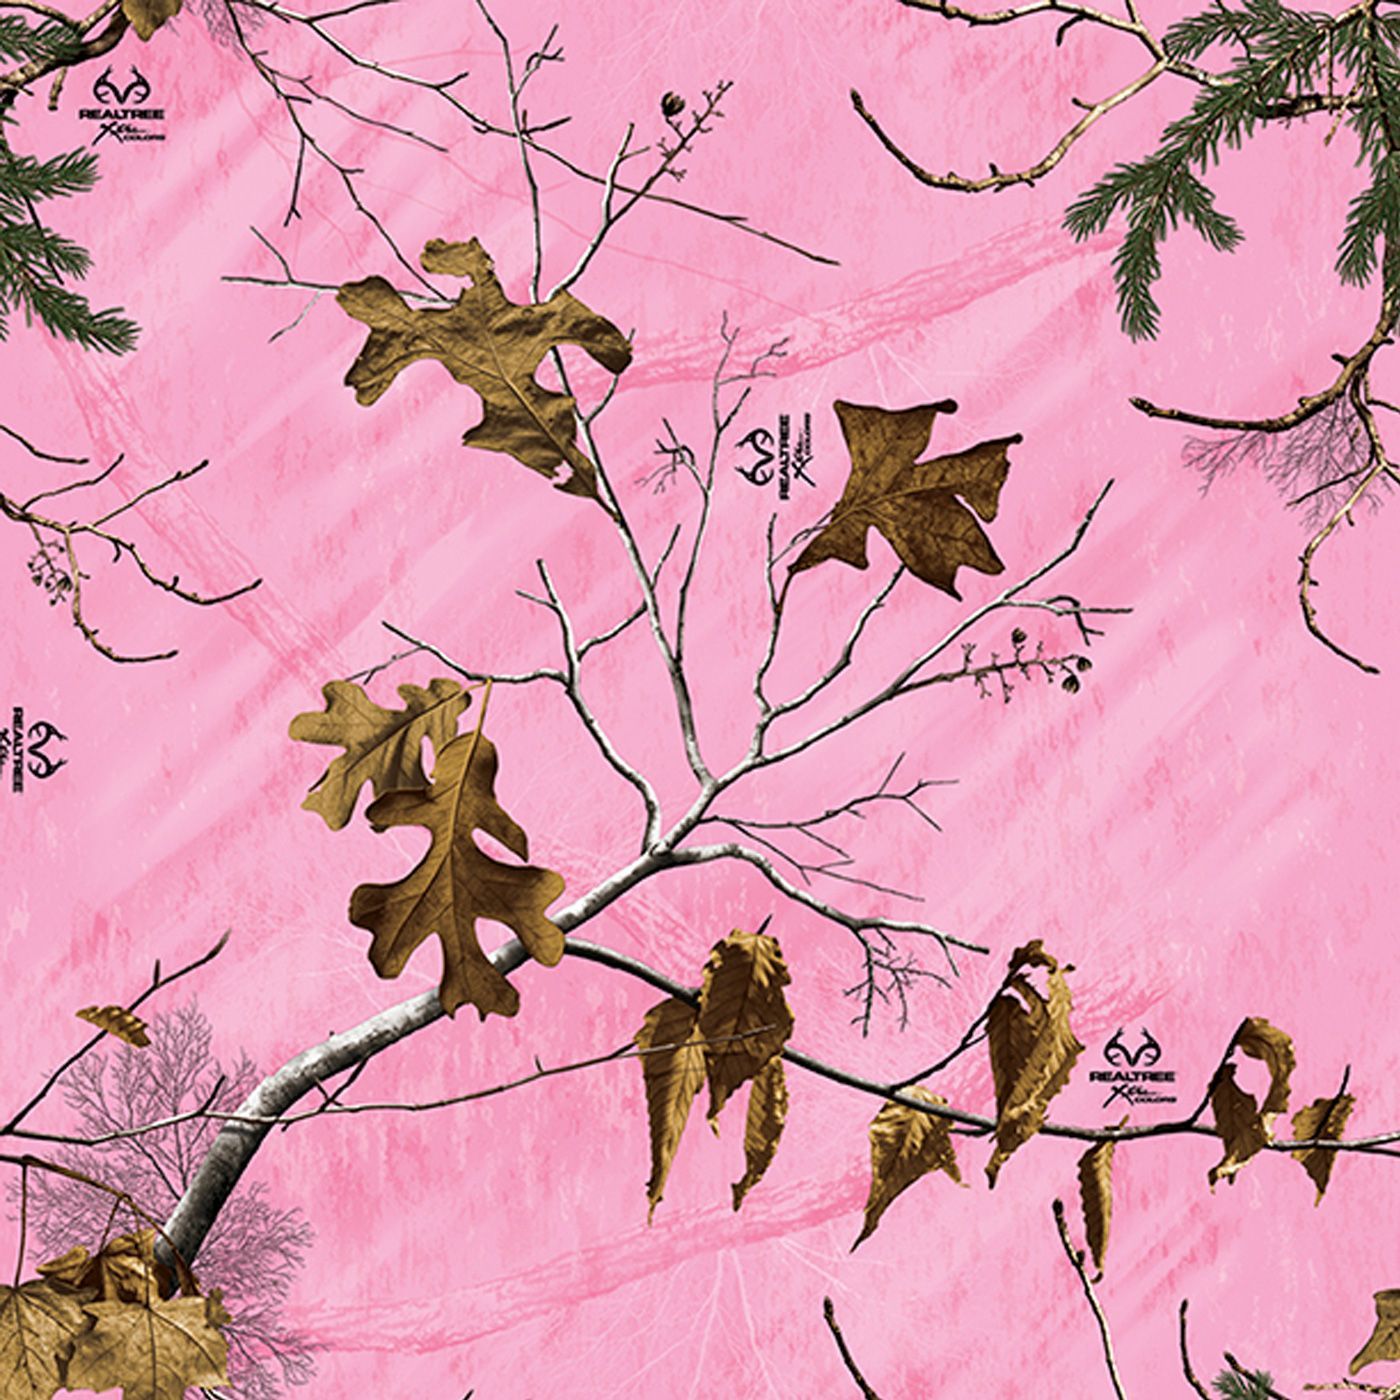 pink camo. Camo wallpaper, Camo patterns, Vinyl rolls